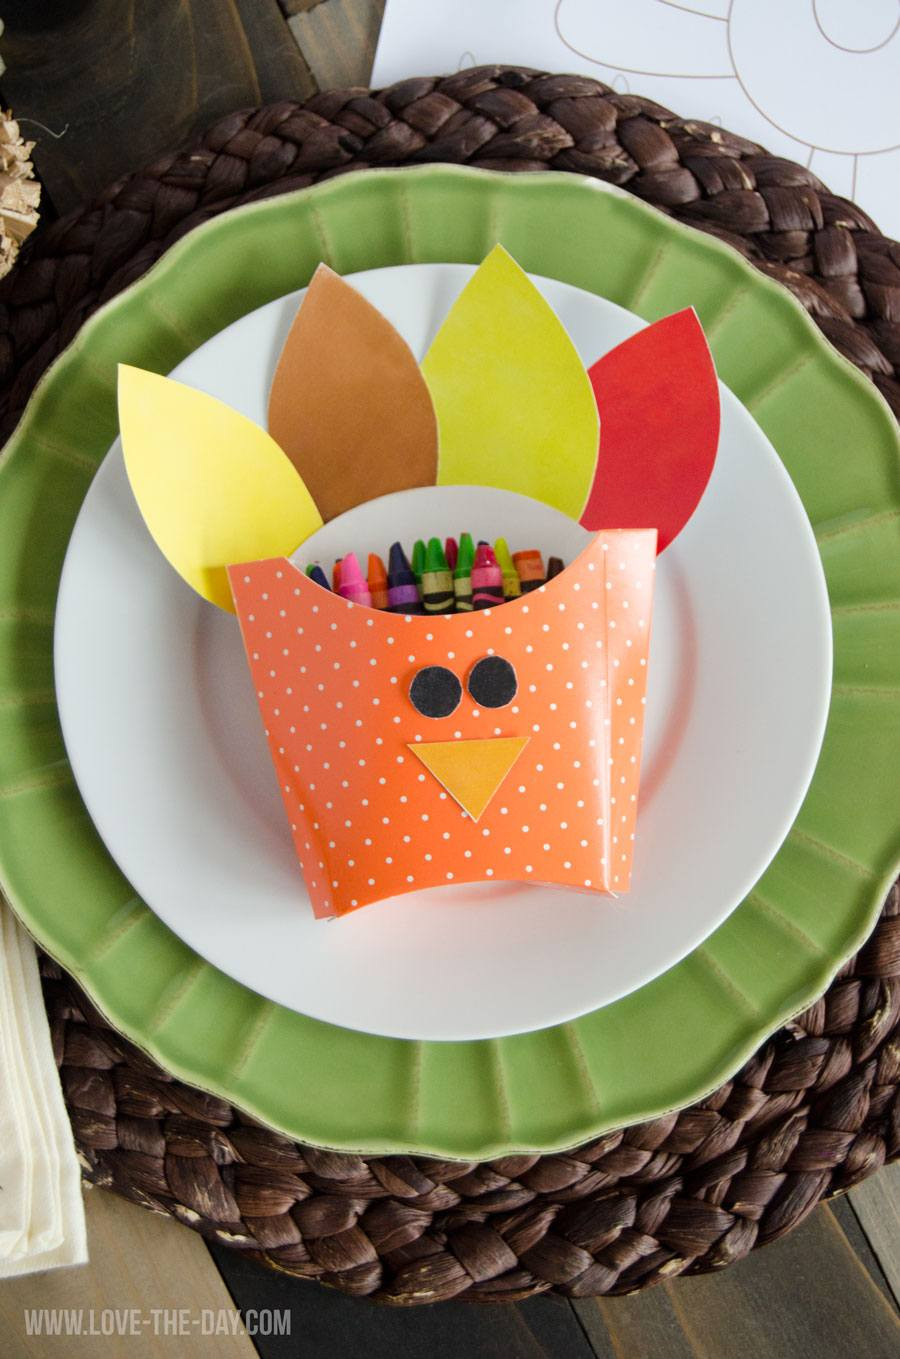 DIY Thanksgiving Crafts For Toddlers
 15 DIY Turkey Craft Projects for Thanksgiving on Love the Day